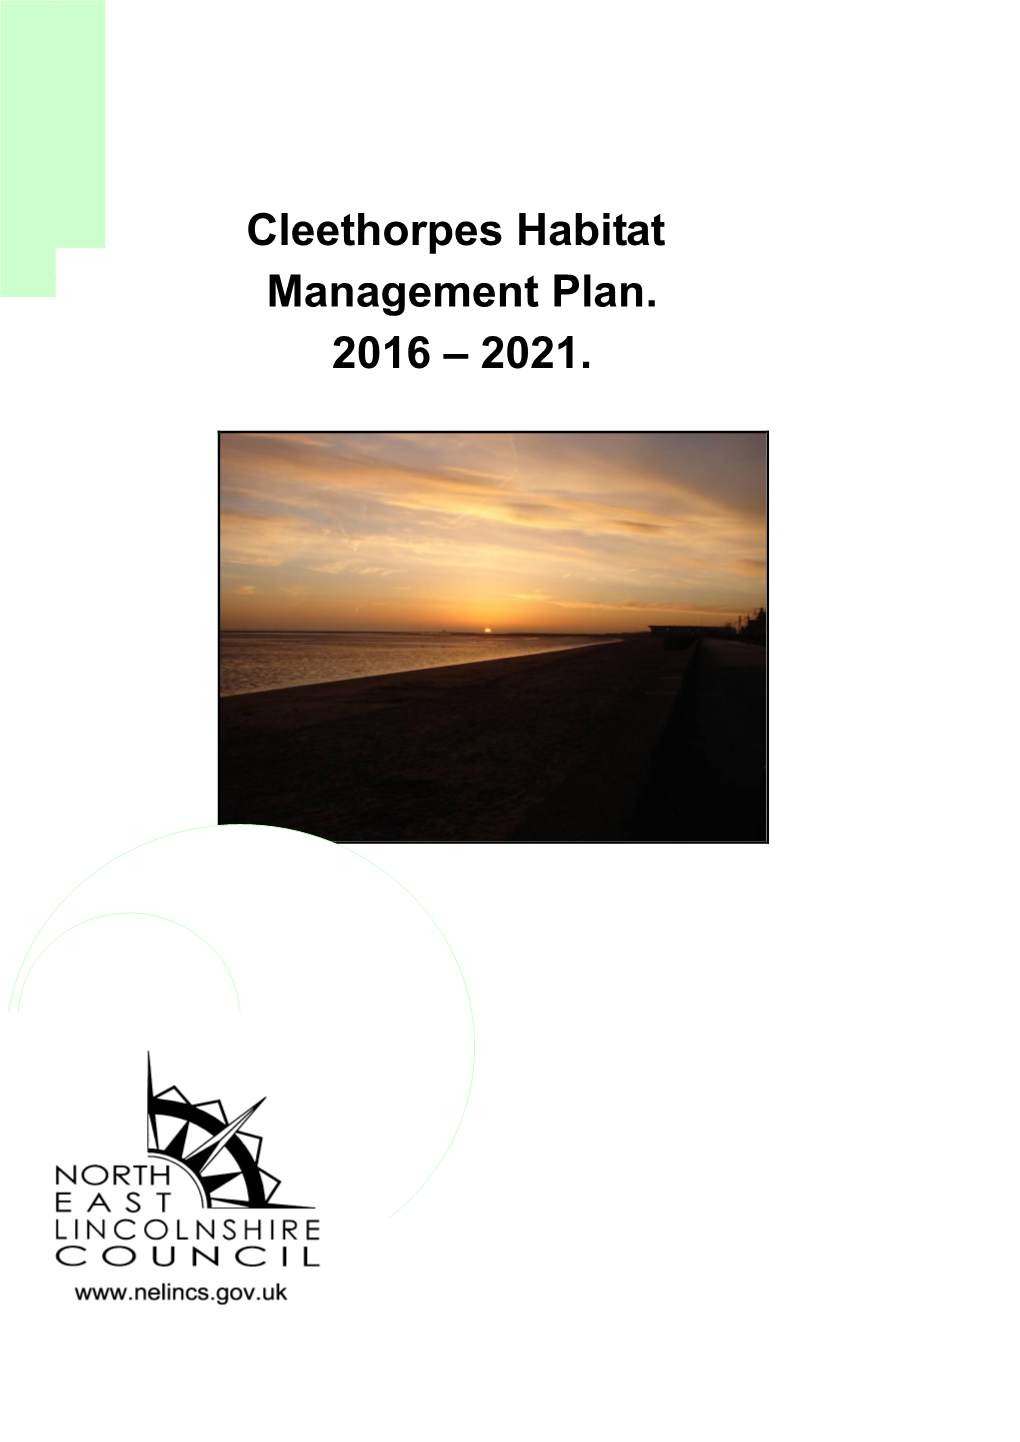 Cleethorpes Habitat Management Plan 2016 – 2021